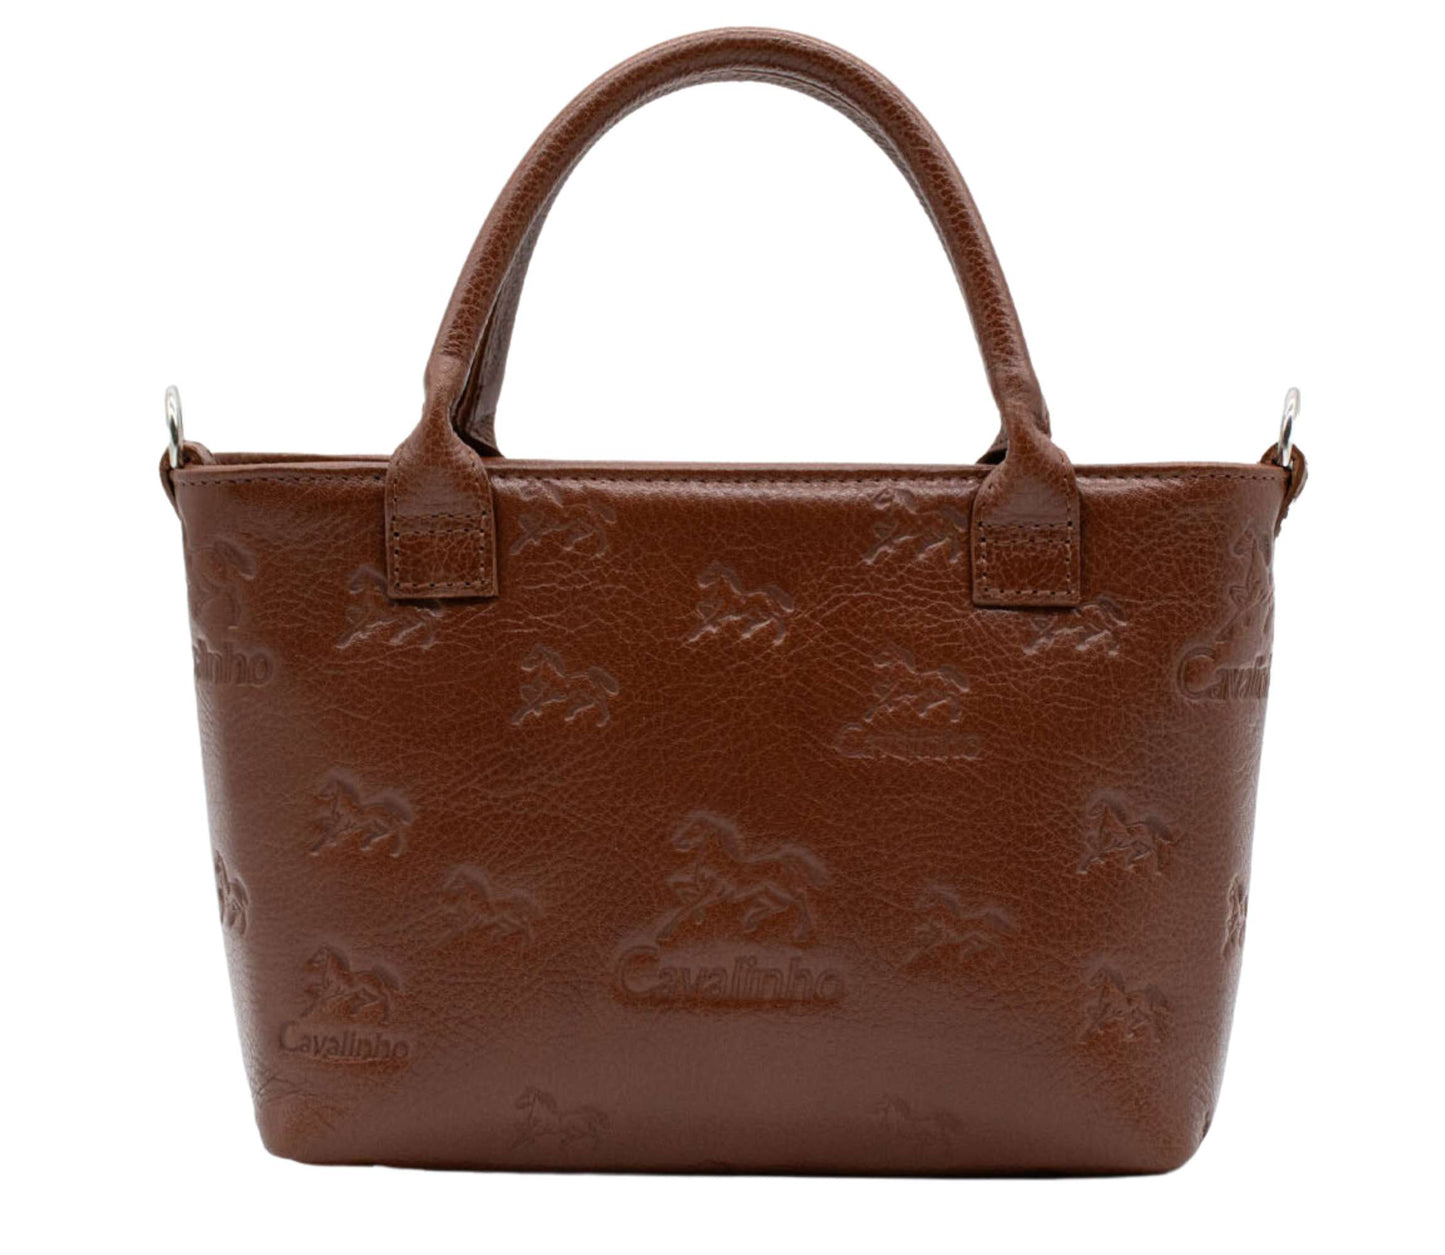 Cavalinho Cavalo Lusitano Mini Leather Handbag - SaddleBrown - 18090243.13.99_3